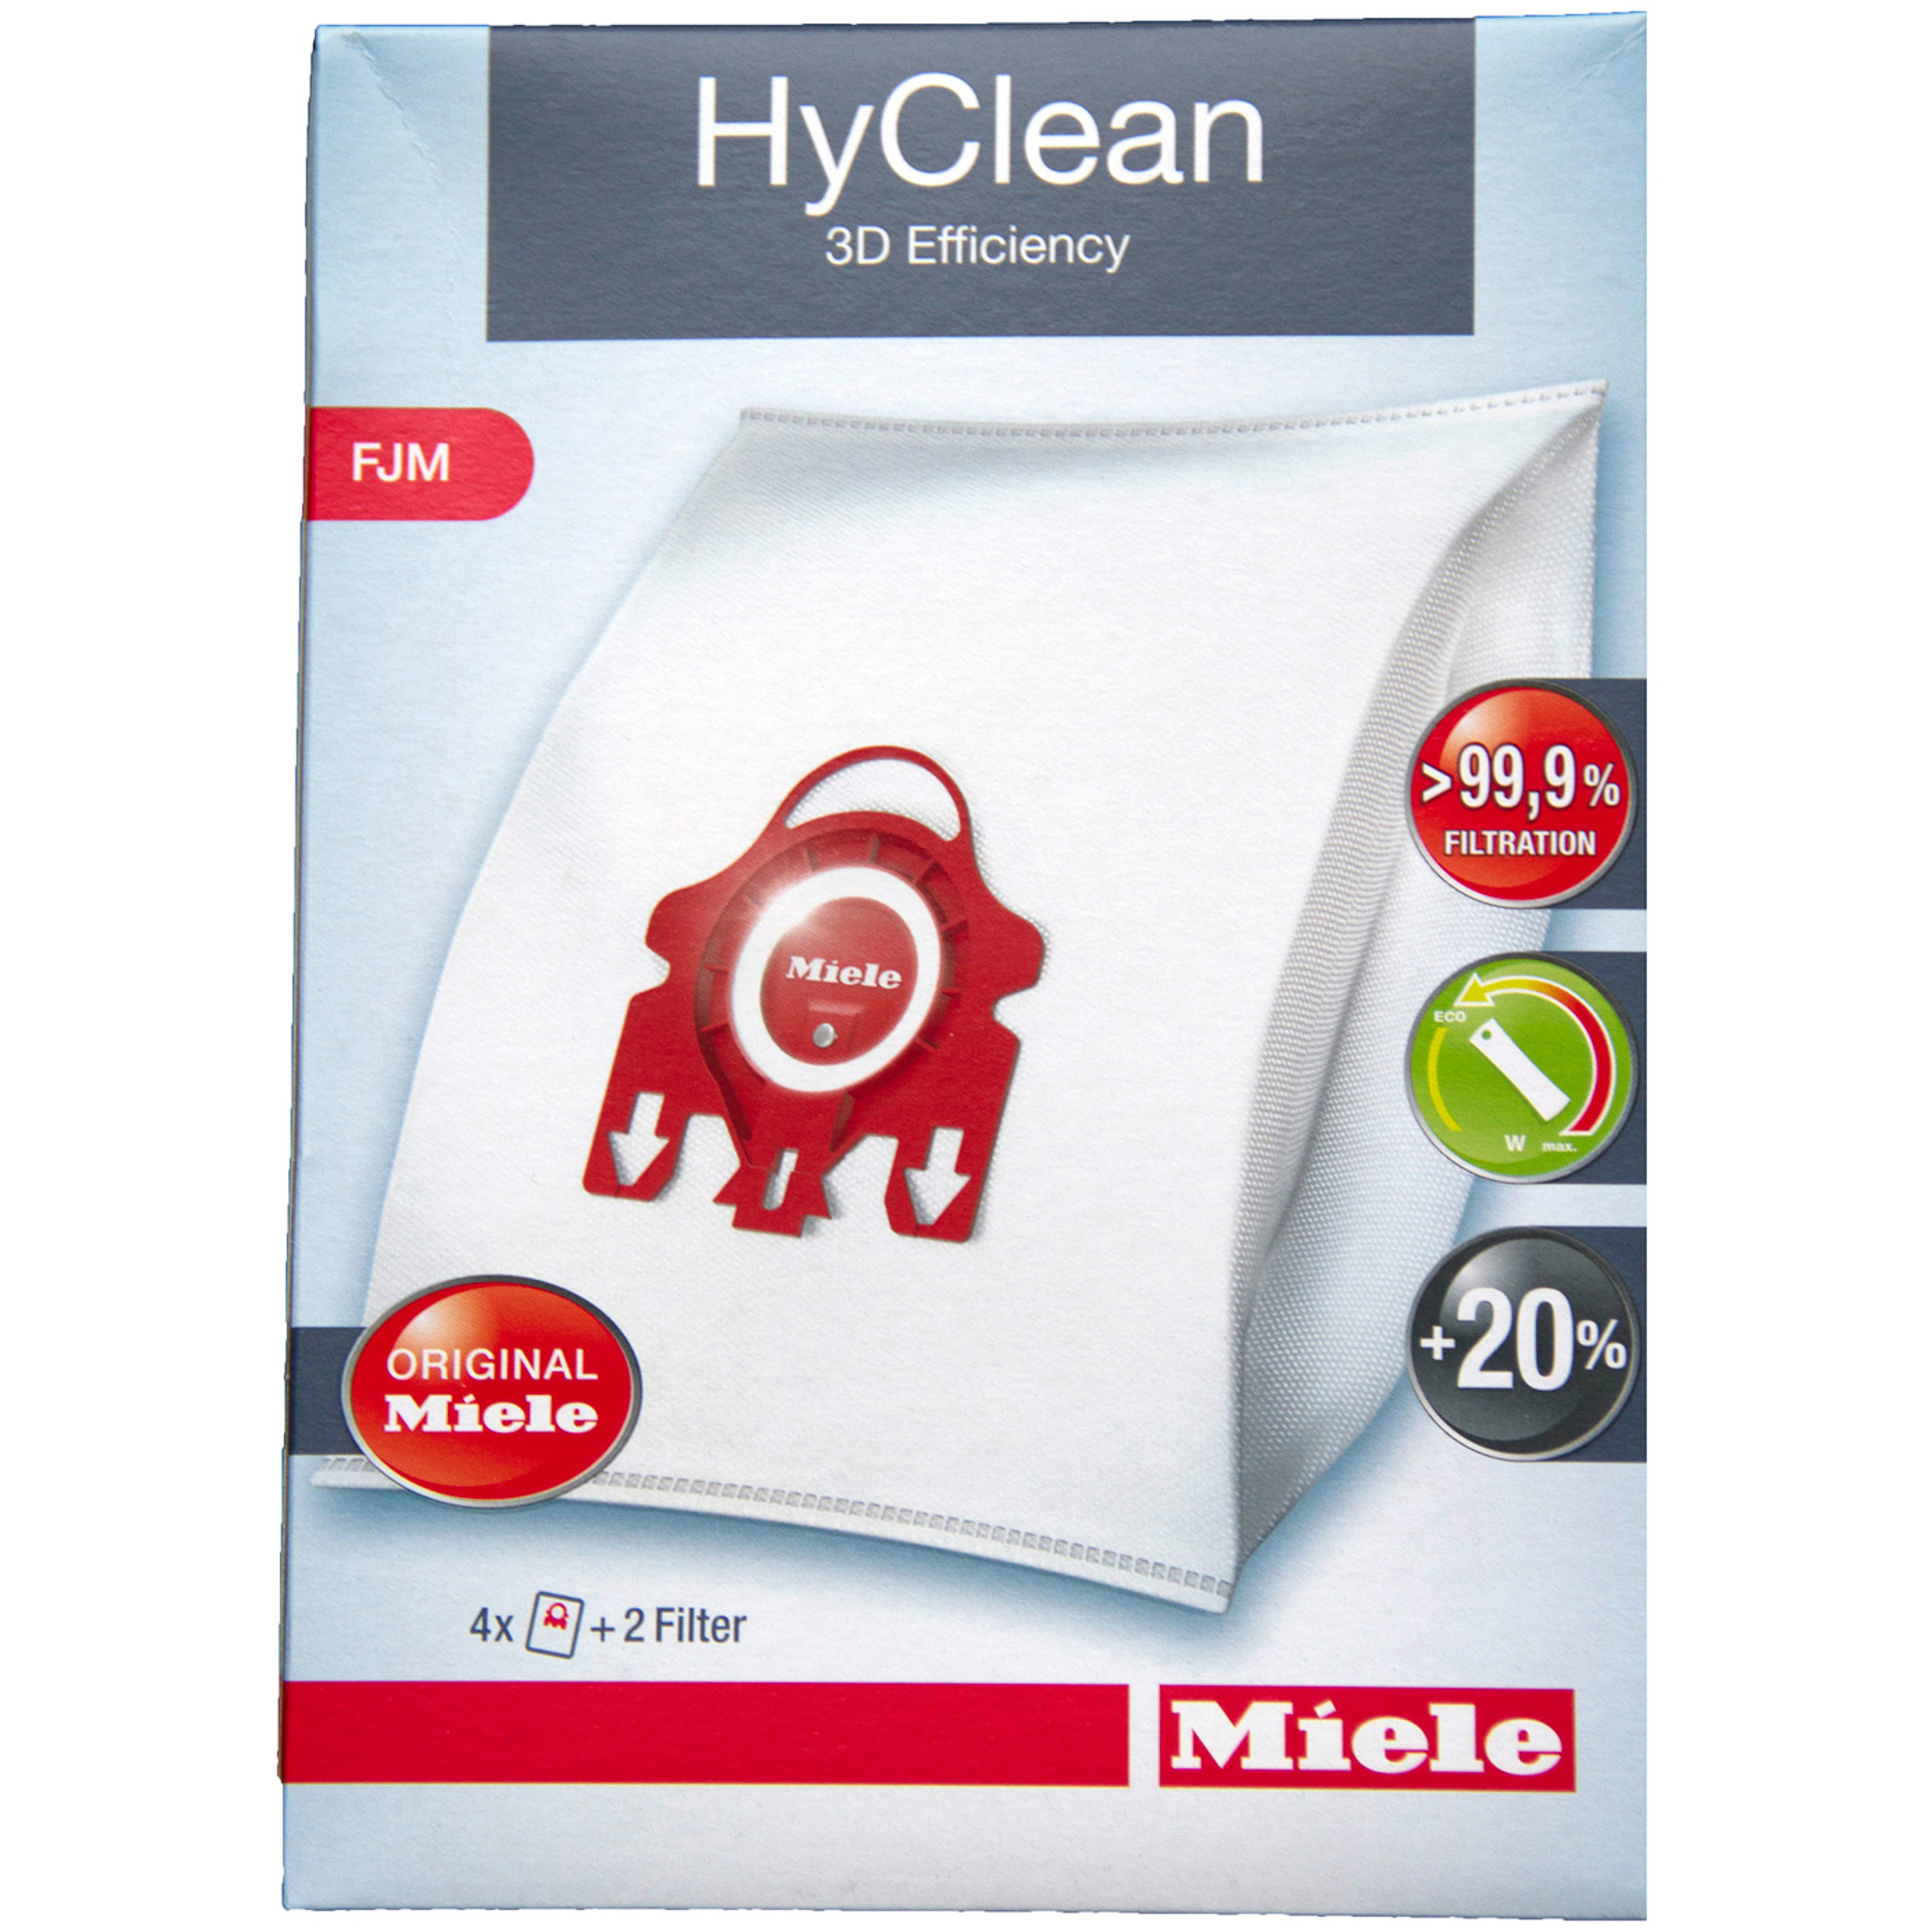 Пылесборник Miele FJM HyClean 3D Efficiency miele комплект fjm xxl hyclean 3d белый красный 16 шт